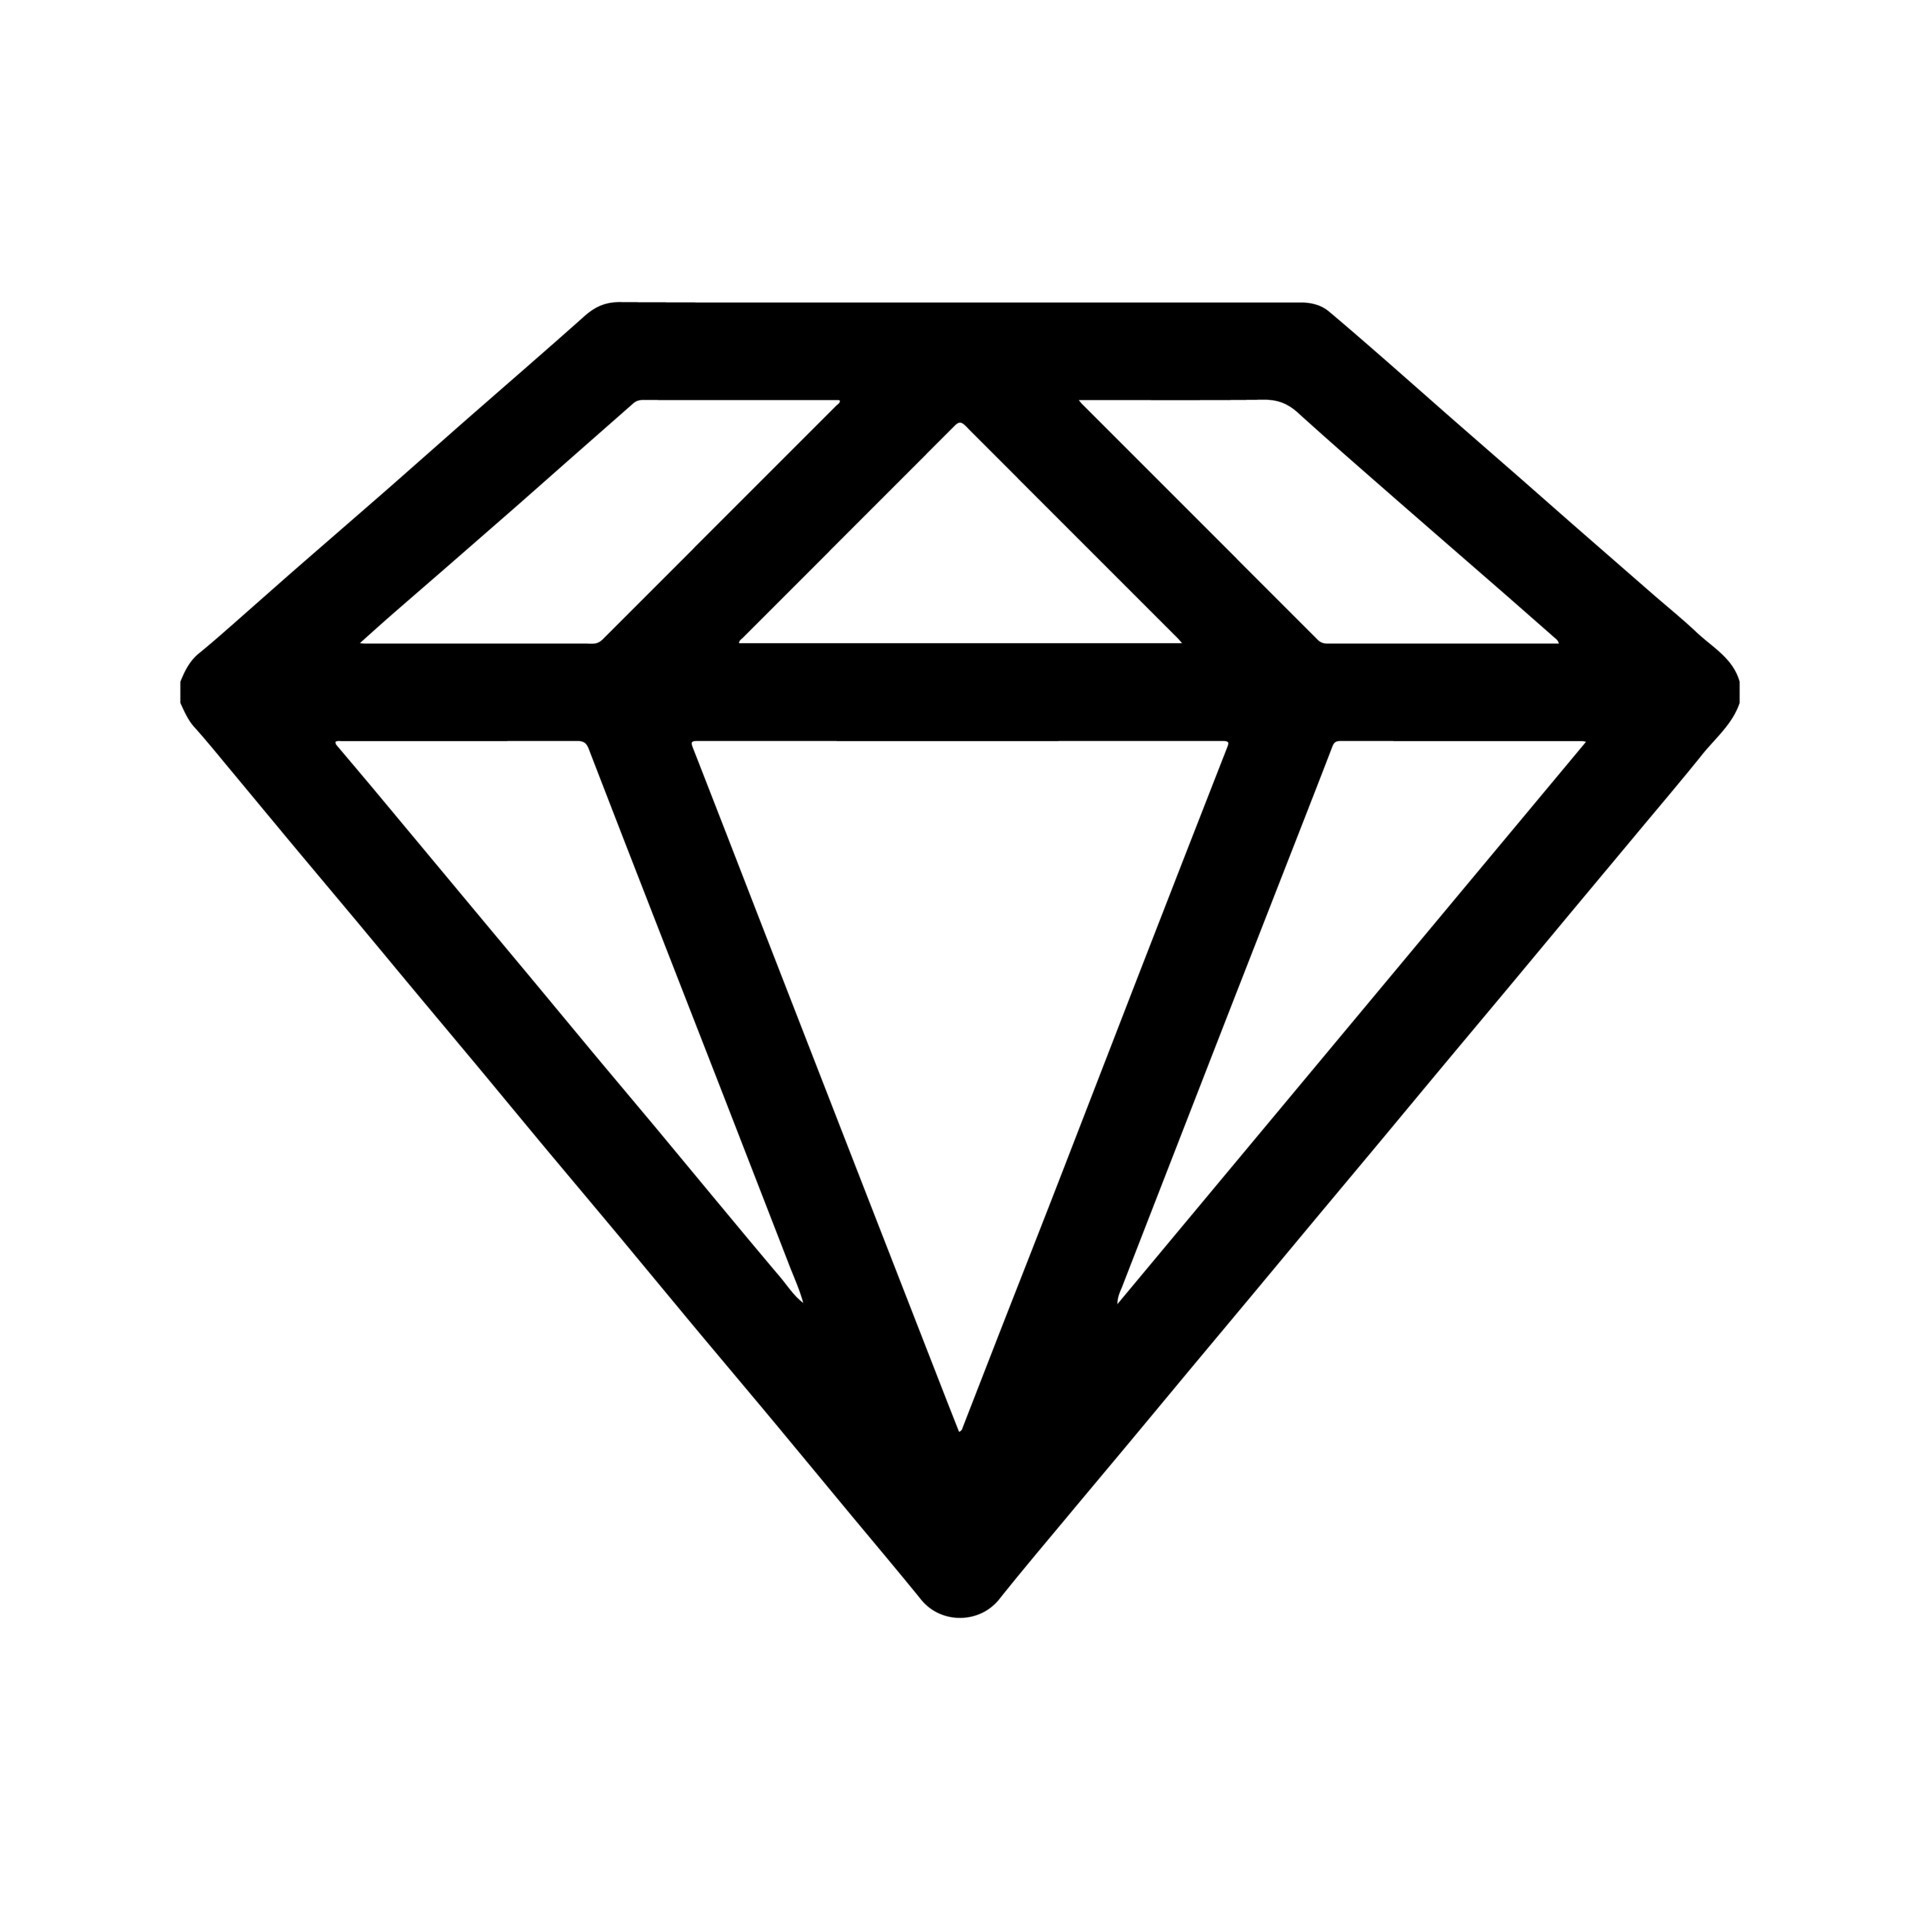 Diamond Drawing - How To Draw A Diamond Step By Step